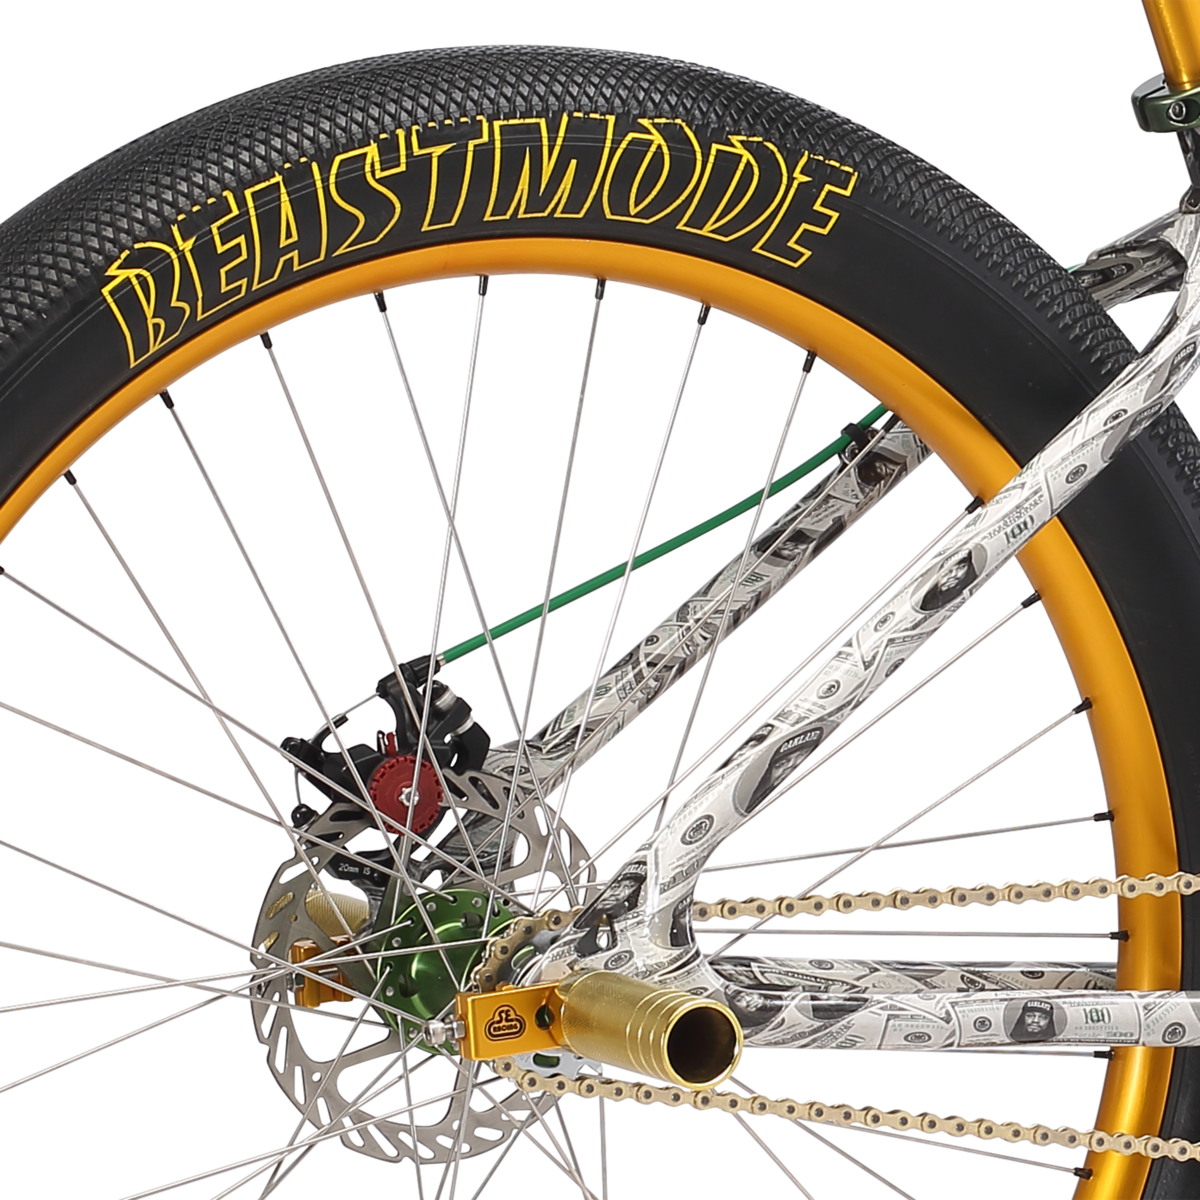 se bikes beast mode for sale